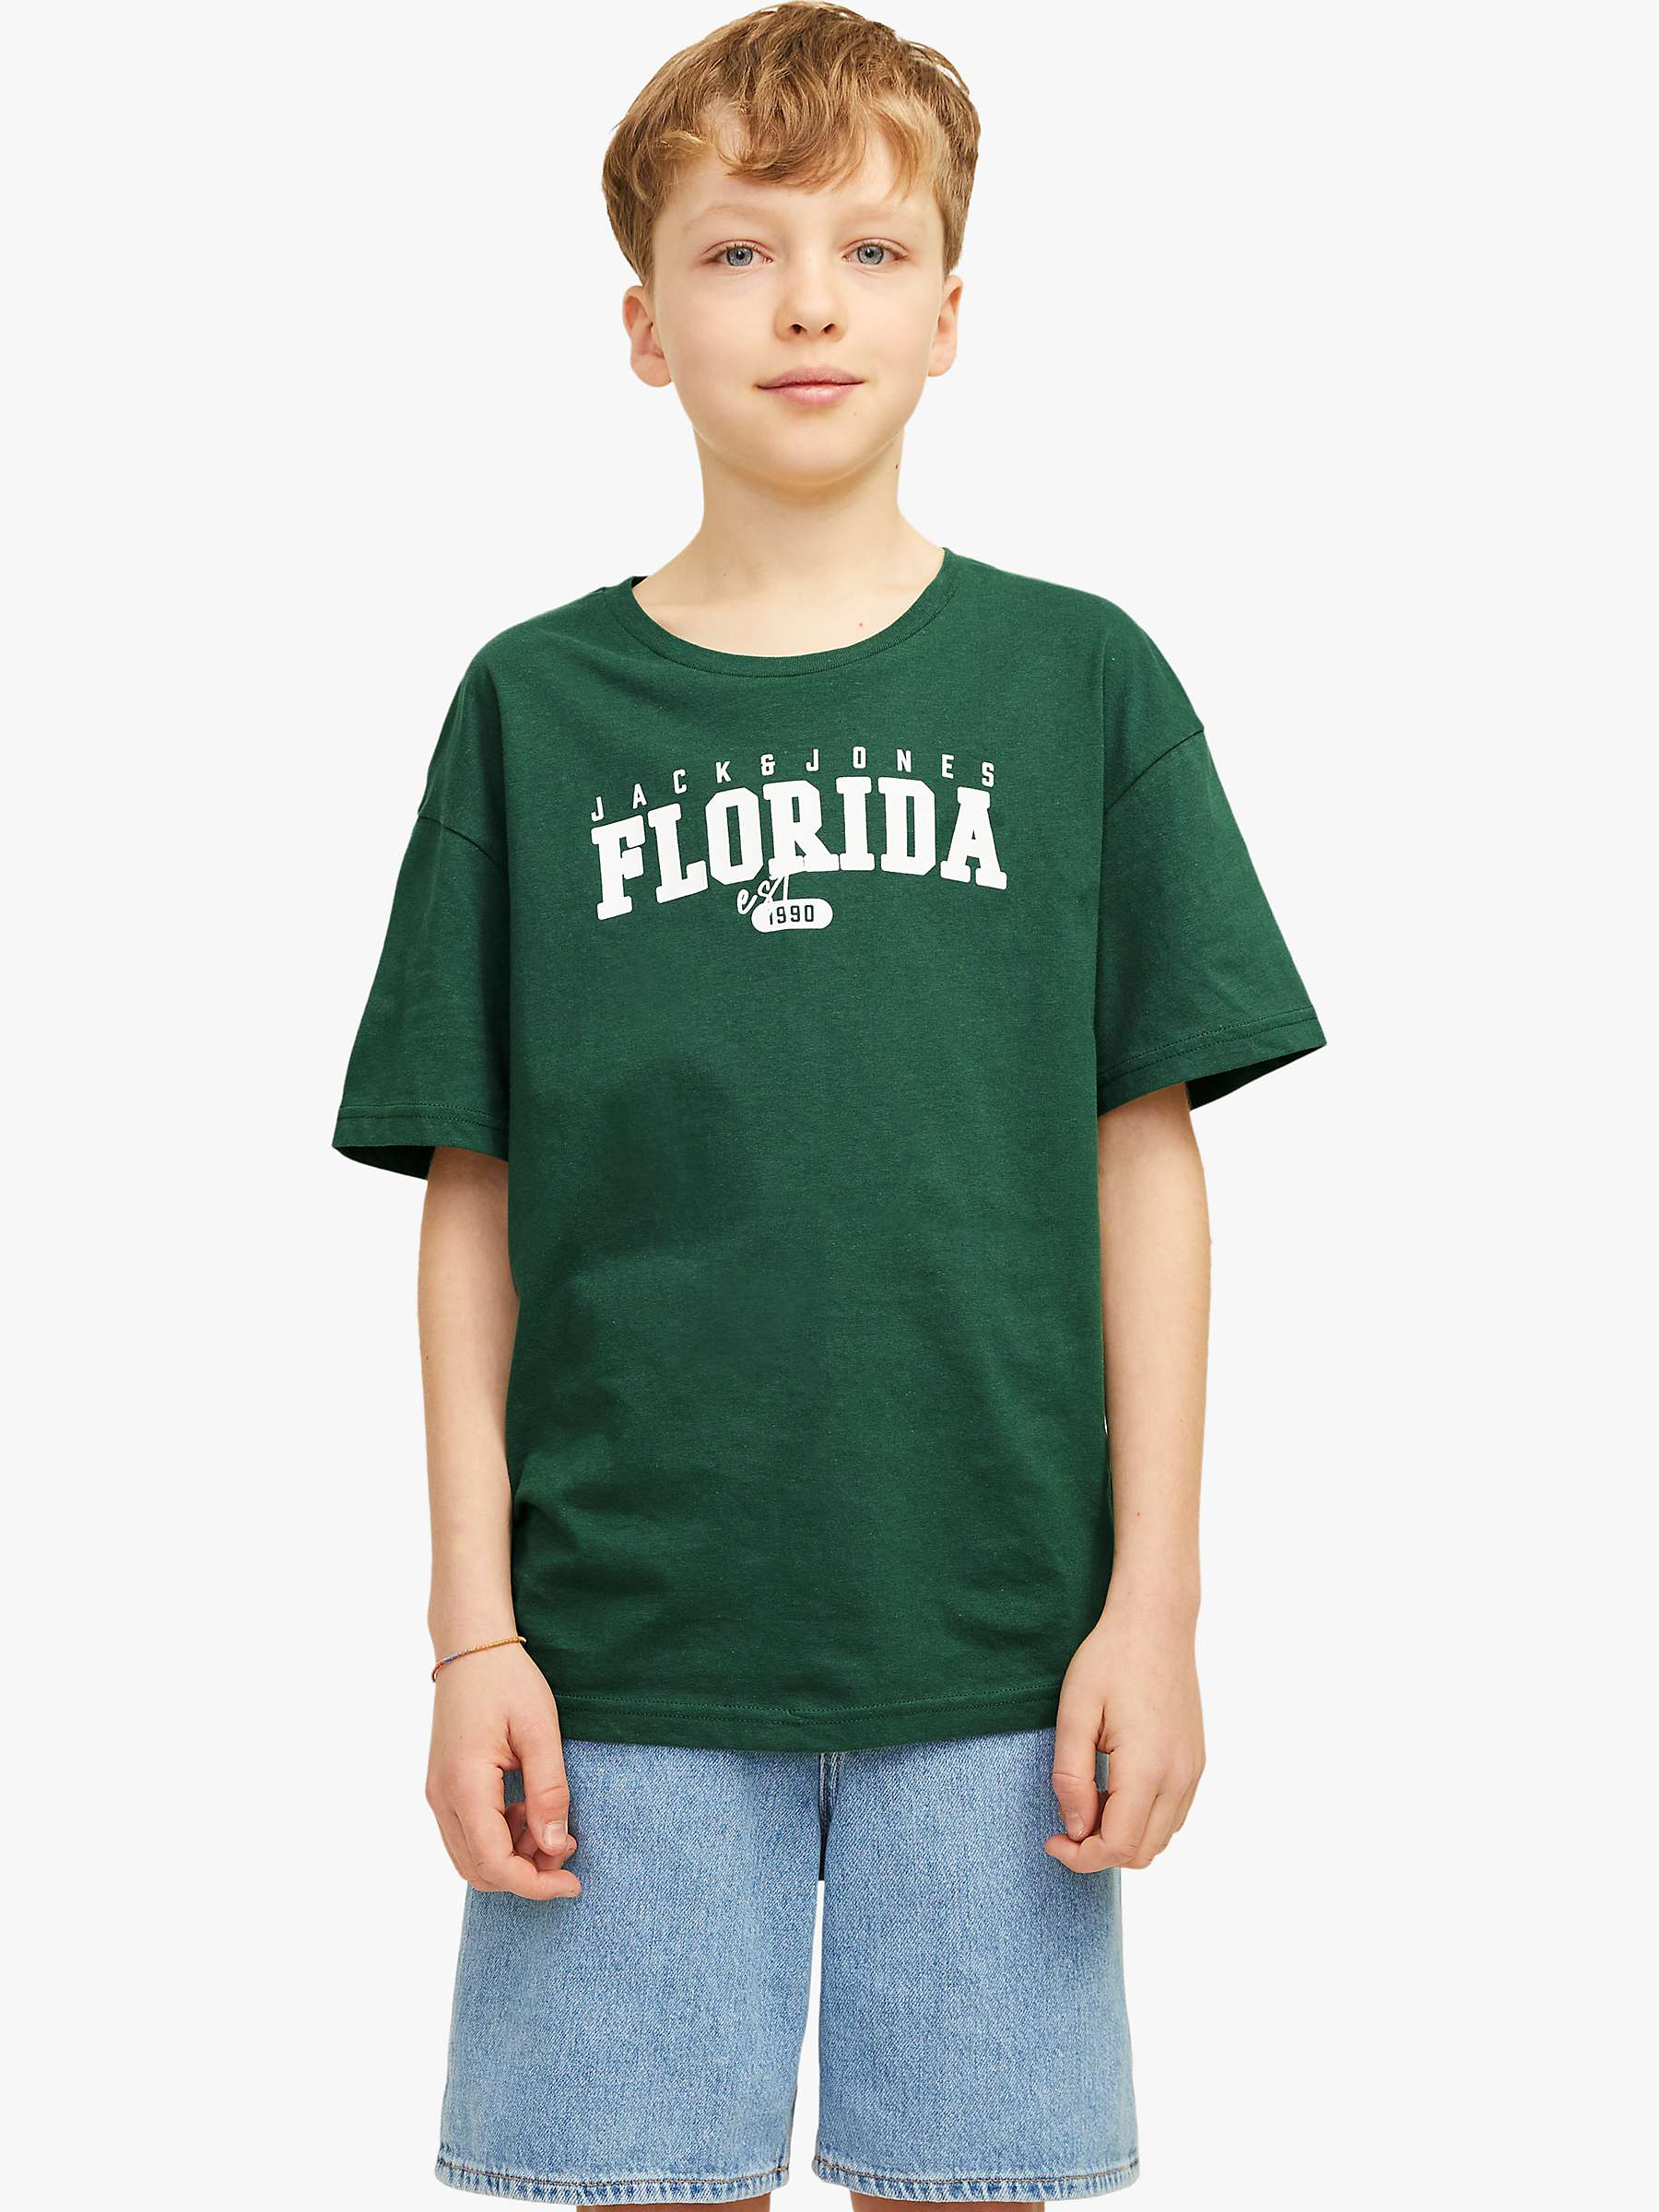 Buy Jack Jones Kids' Cory Florida Cotton T-Shirt, Dark Green Online at johnlewis.com